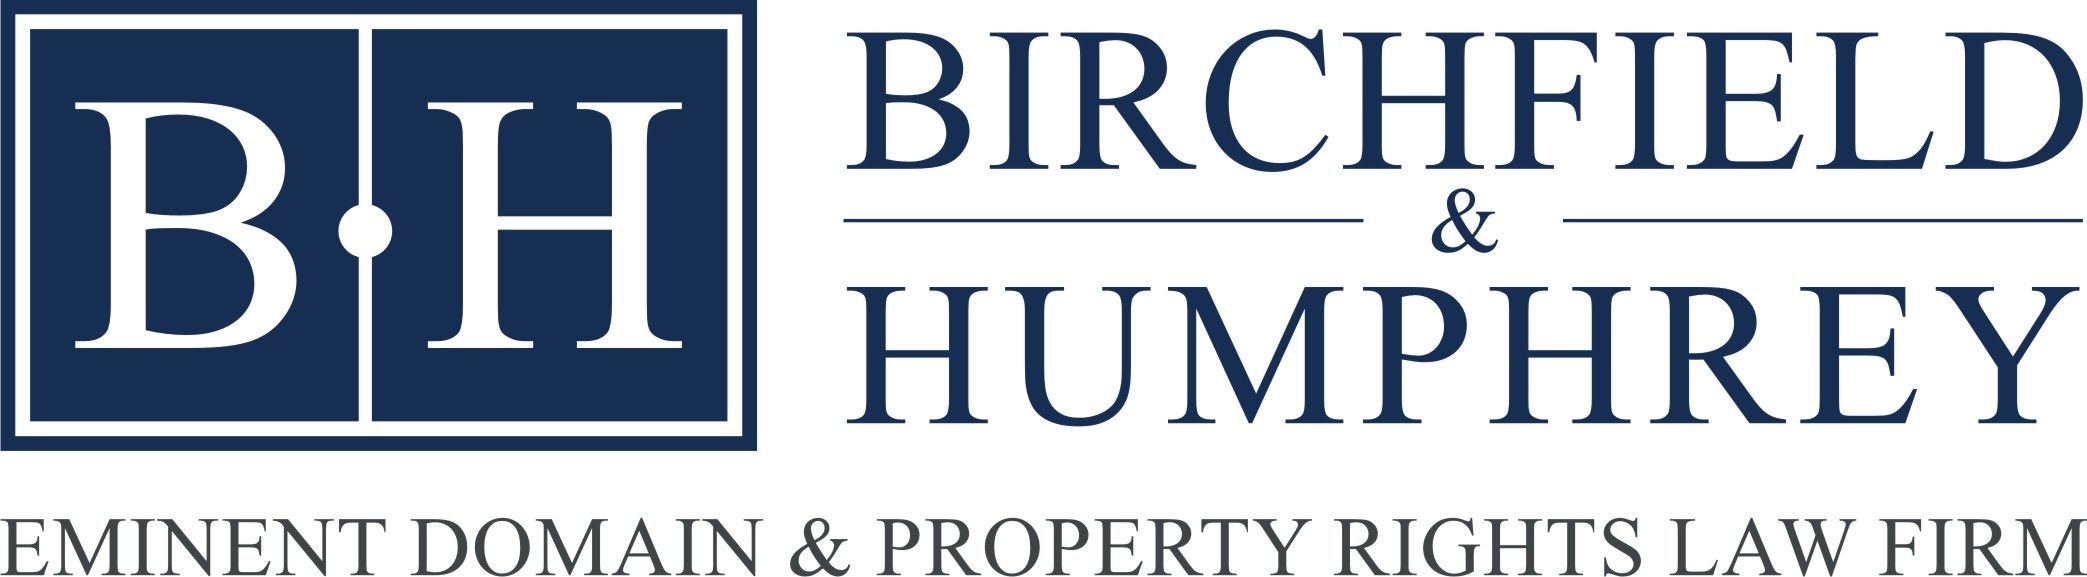 Birchfield&amp;Humphrey logo